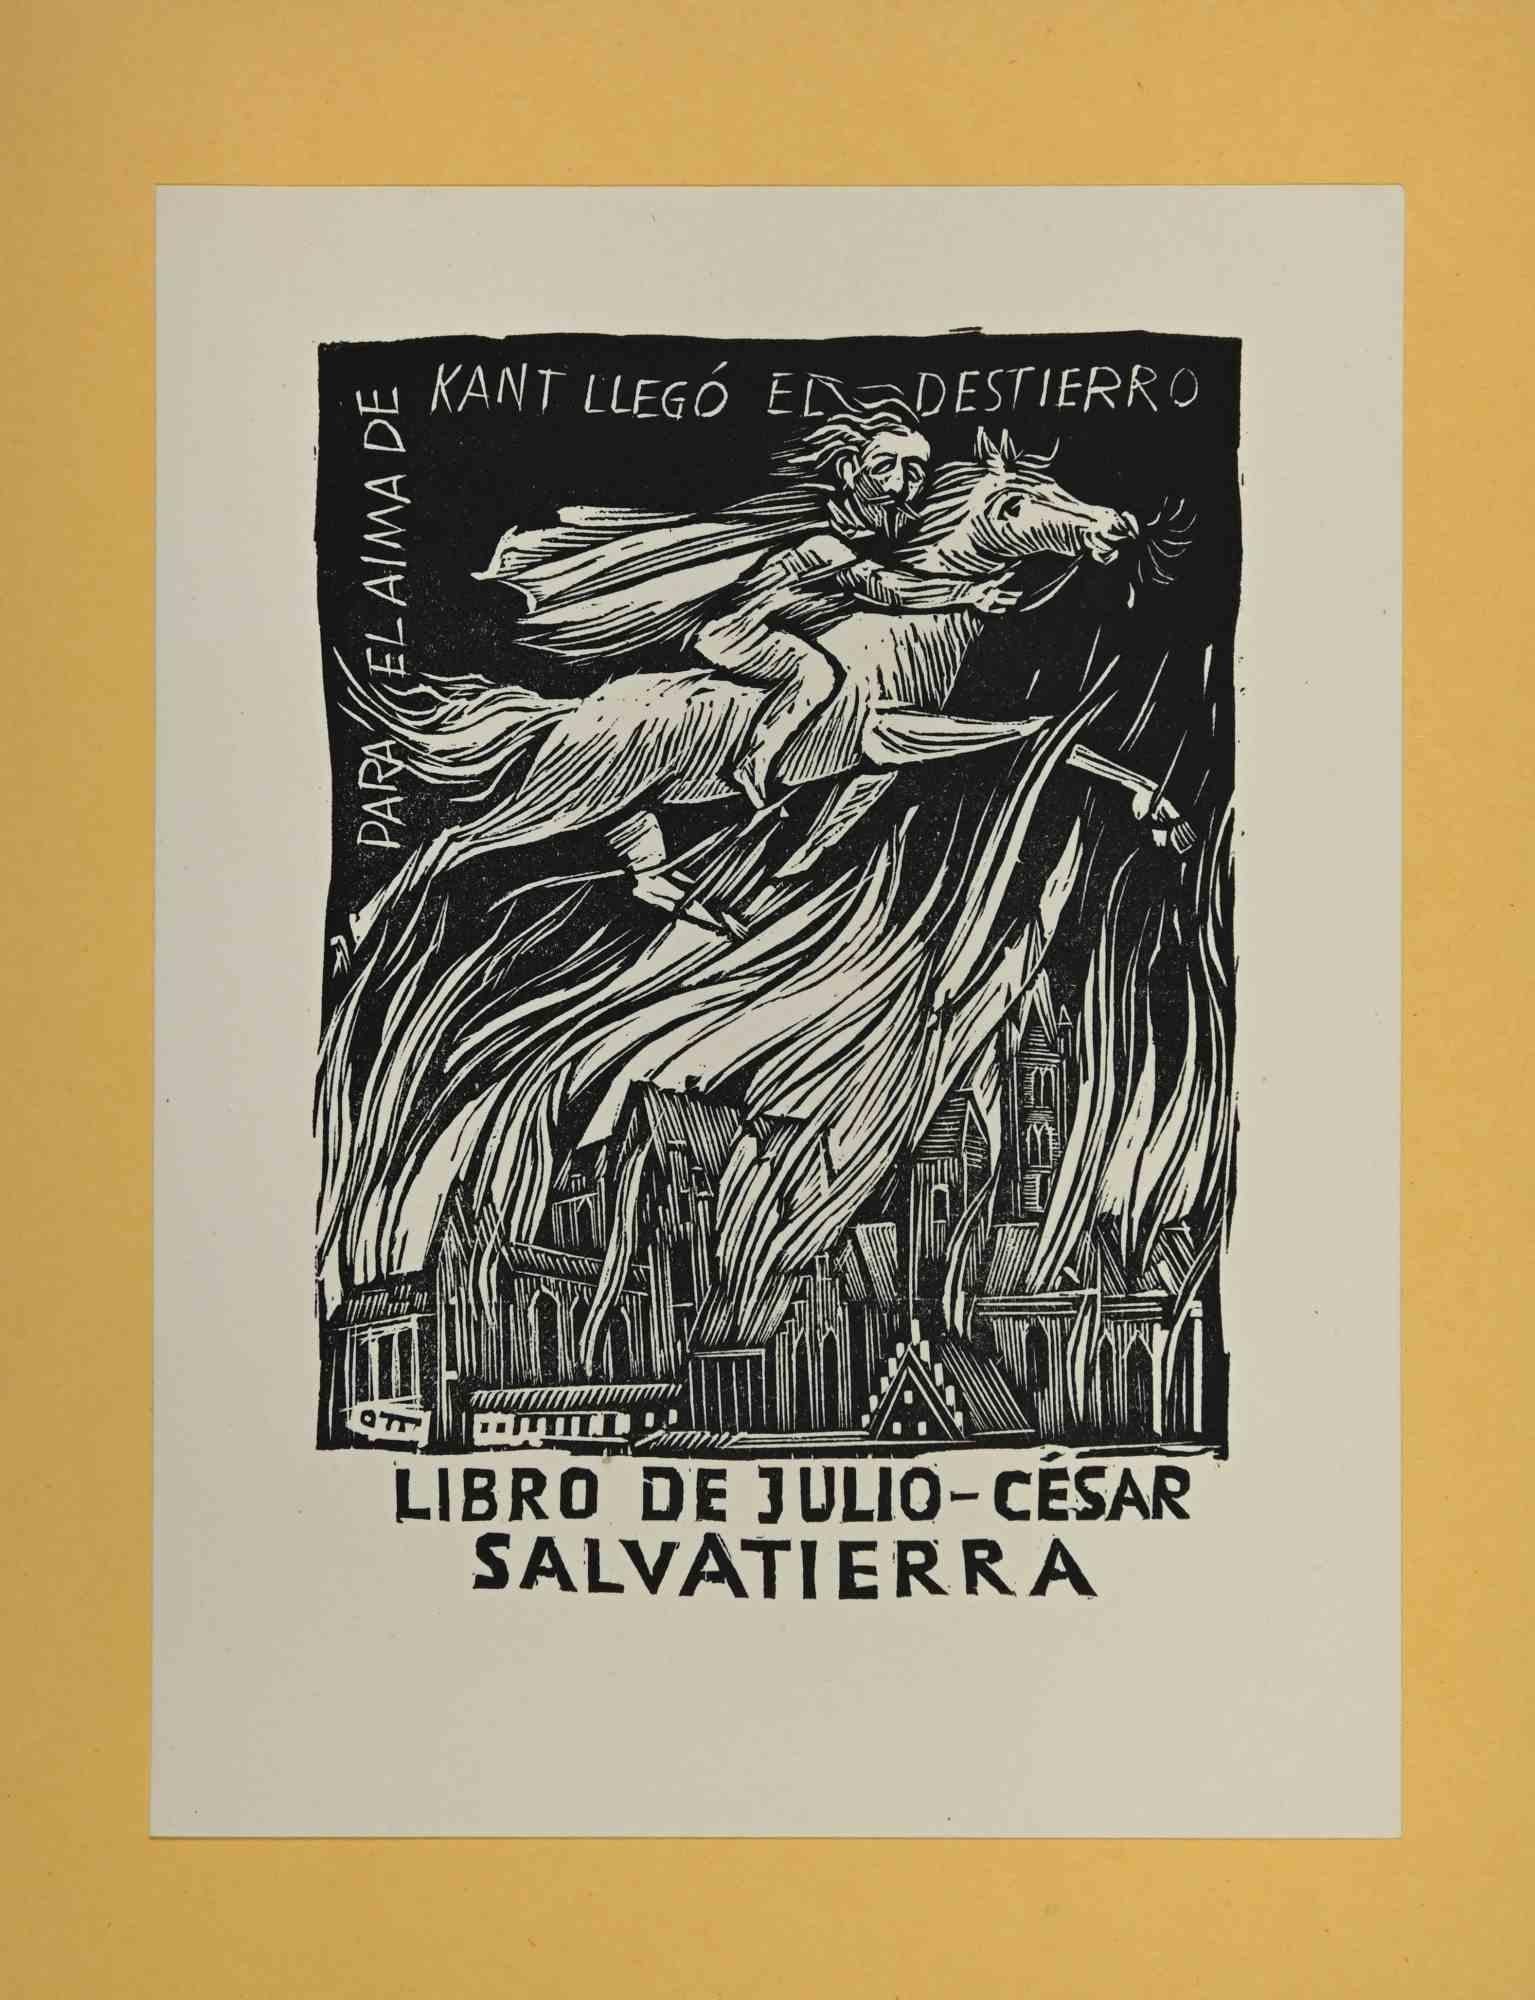 Unknown Figurative Print - Ex-Libris - Salvatierra - woodcut - Mid 20th Century